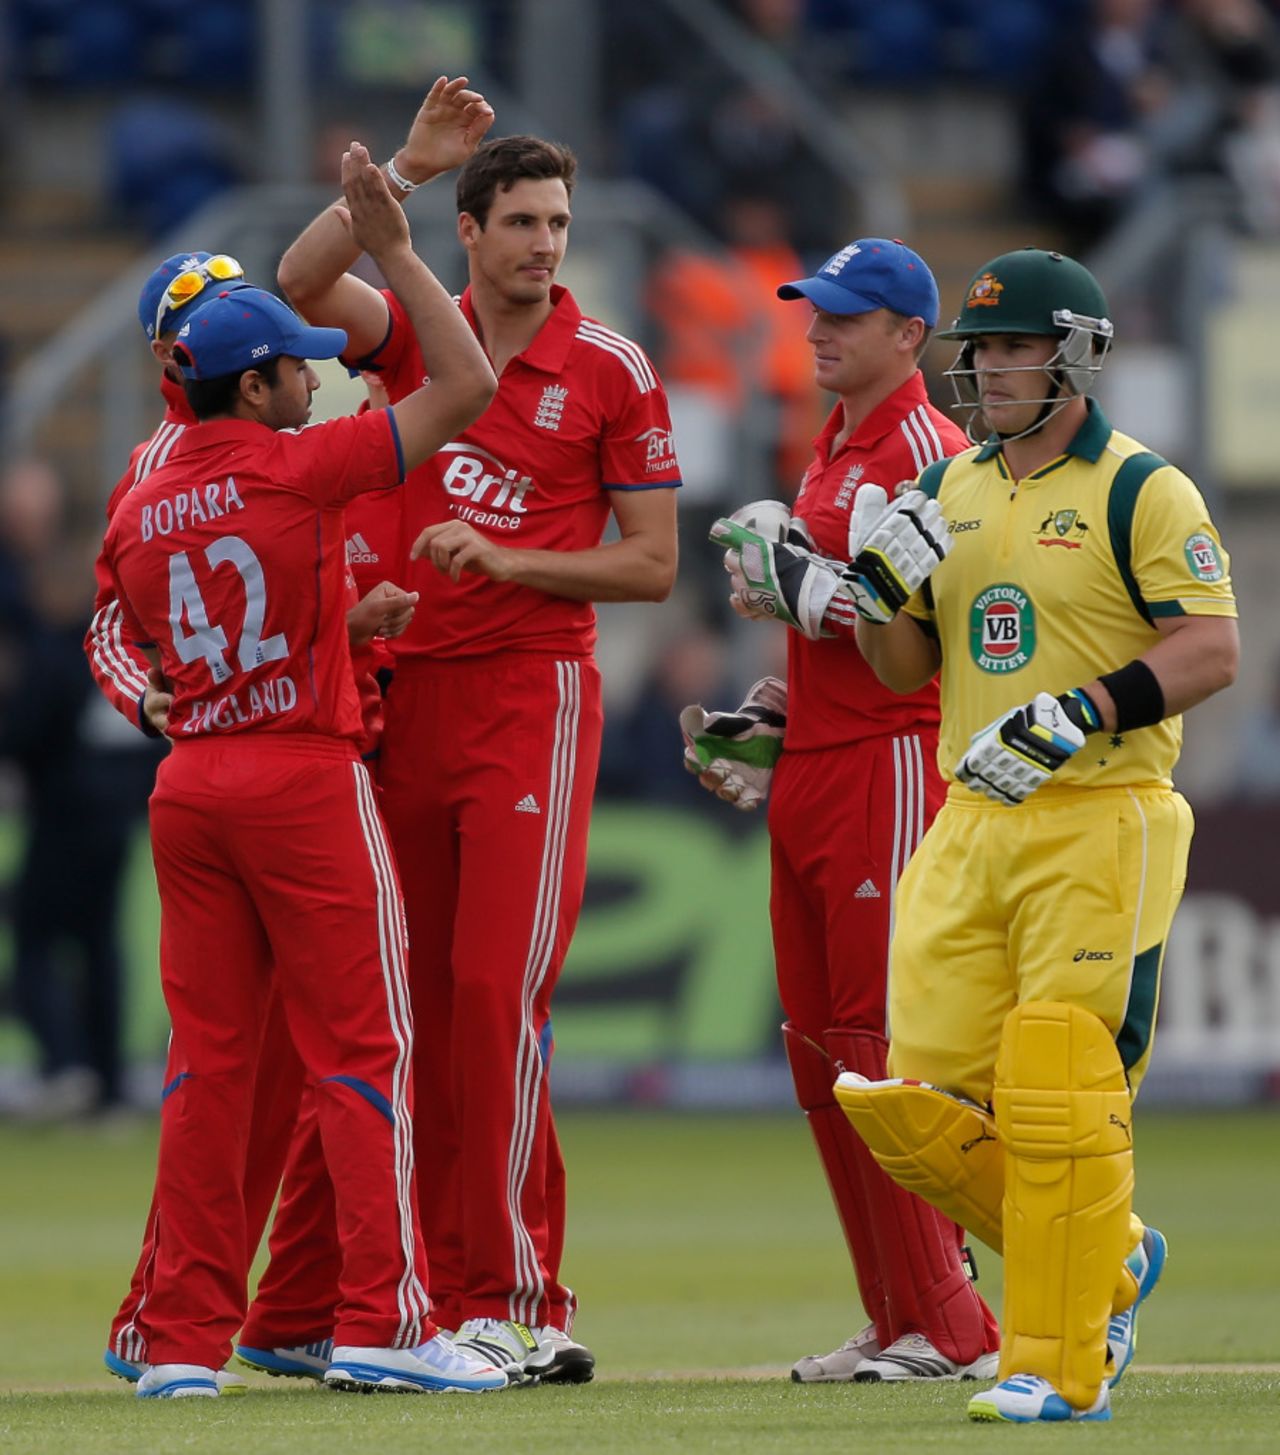 Steven Finn removed Aaron Finch in the first over, England v Australia, 4th NatWest ODI, Cardiff, September 14, 2013